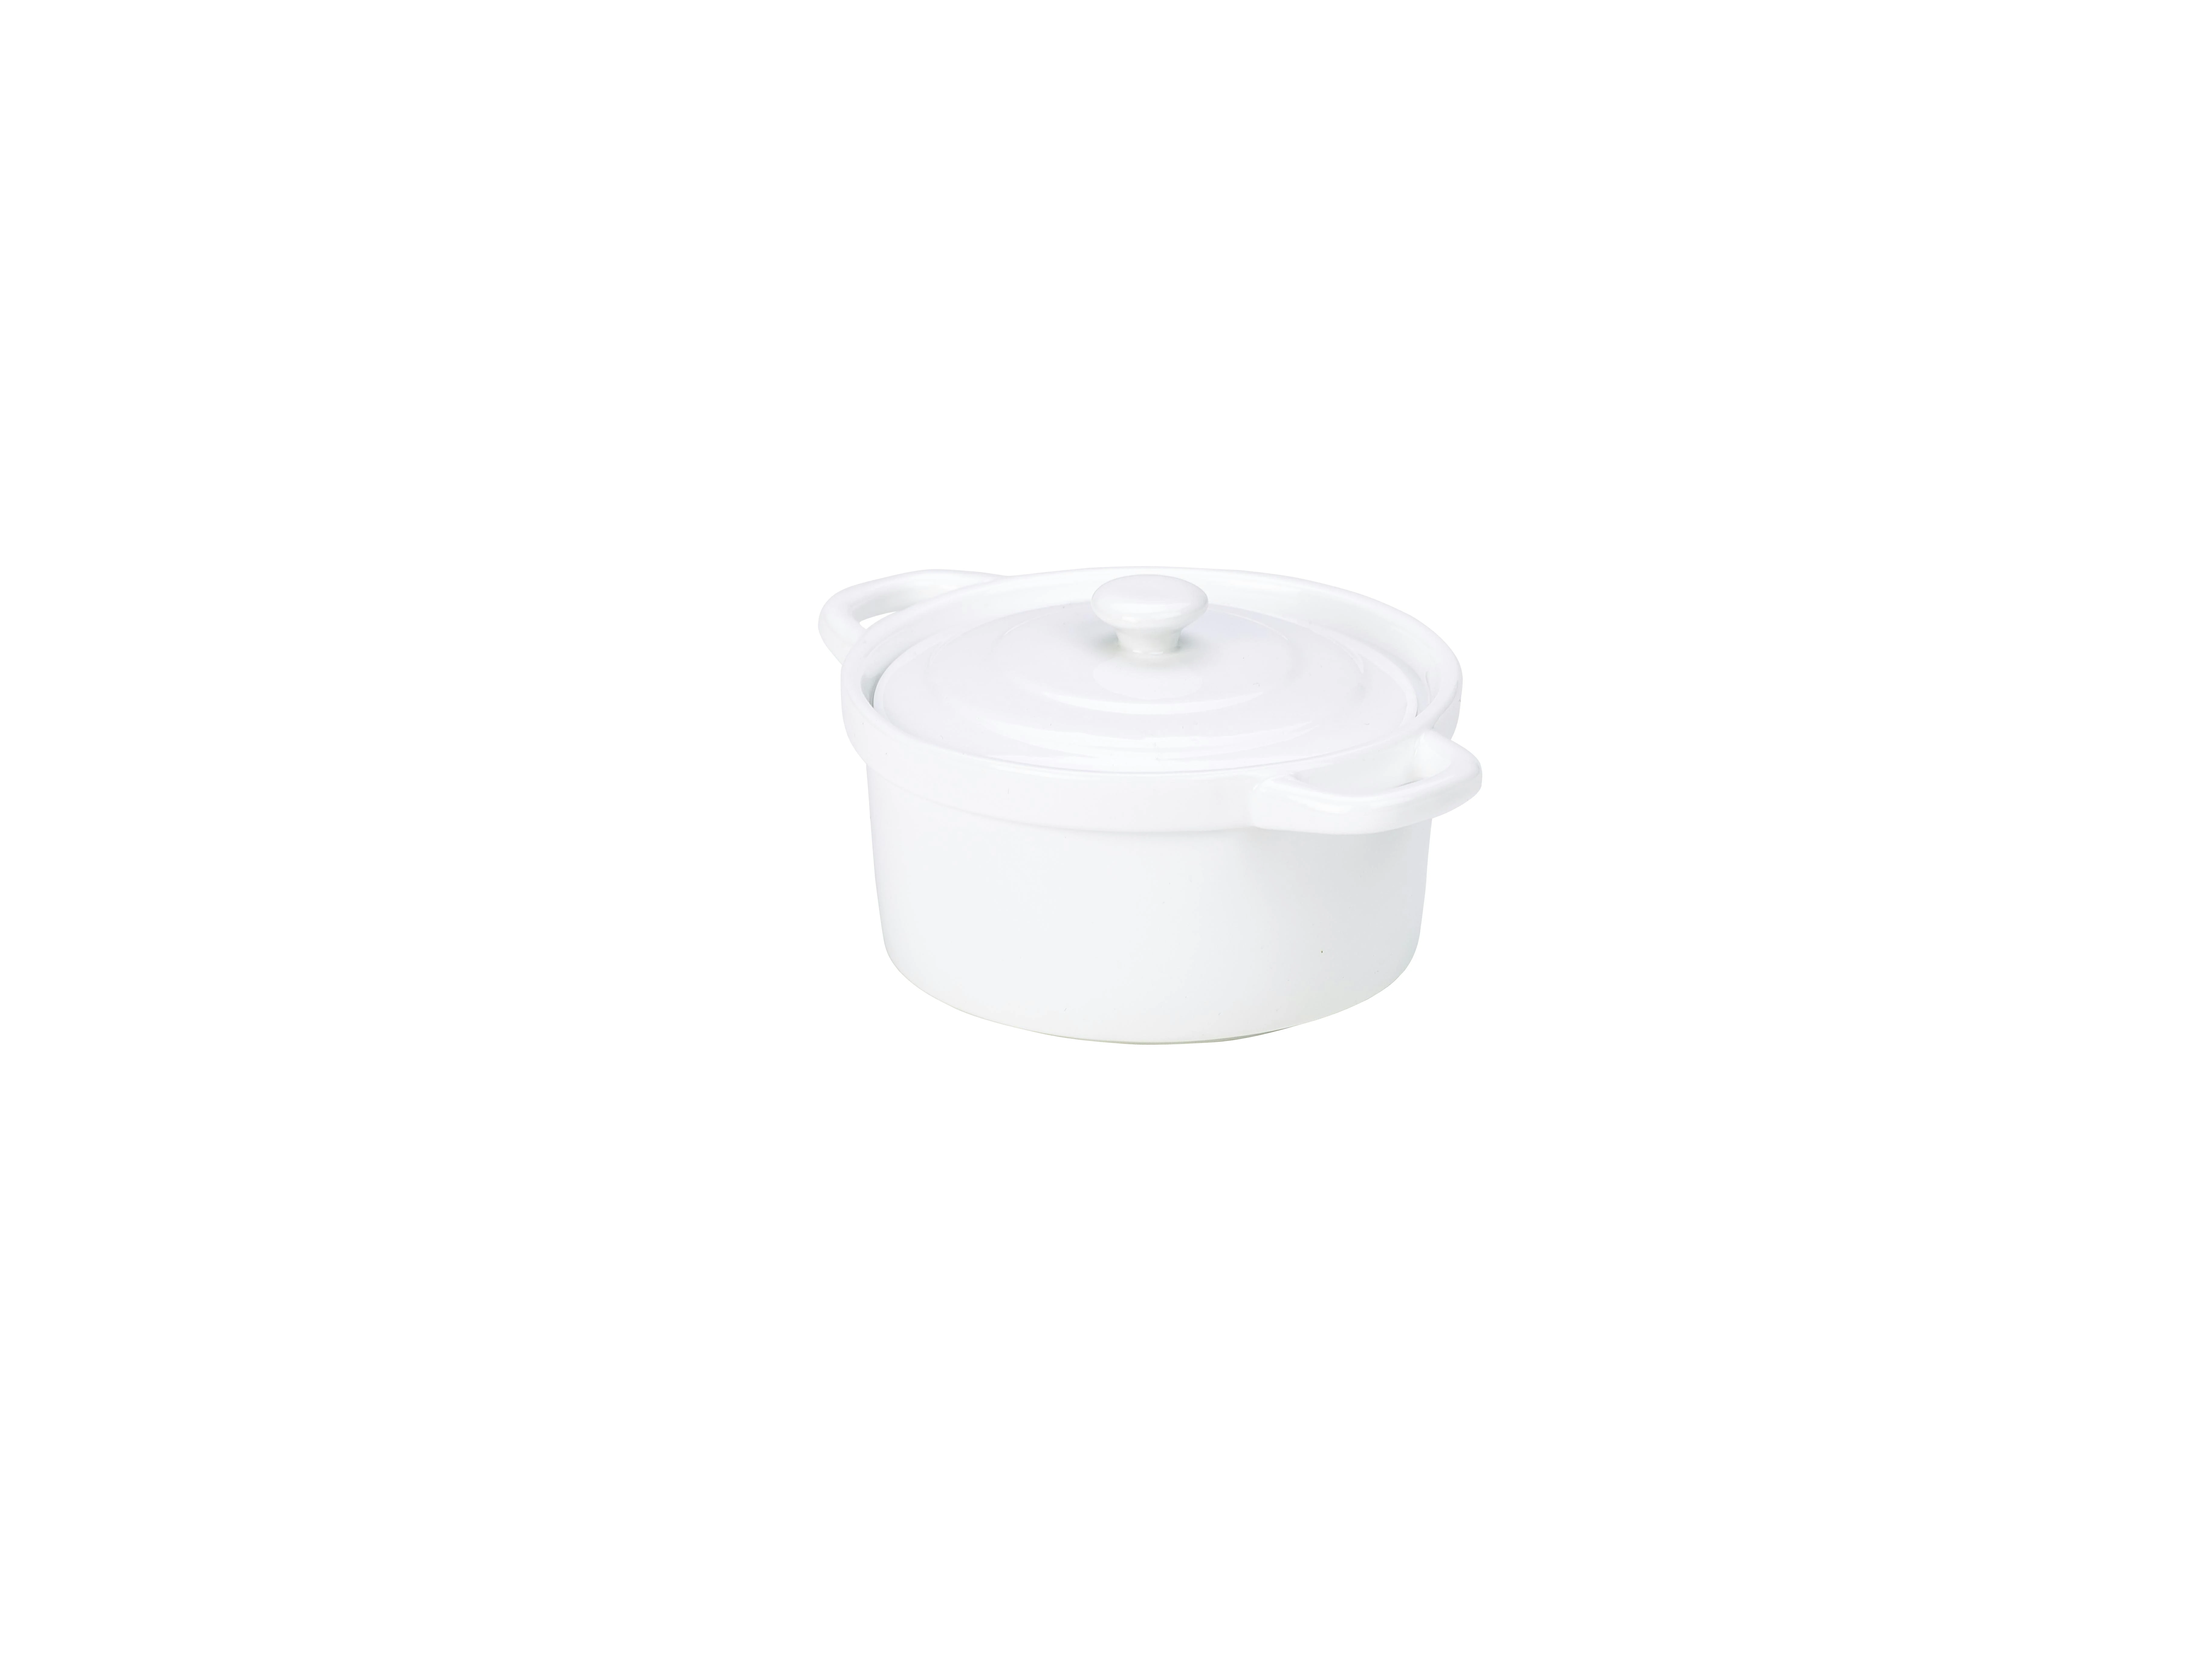 Genware Porcelain Covered Mini Casserole Dish 10.5cm/4"